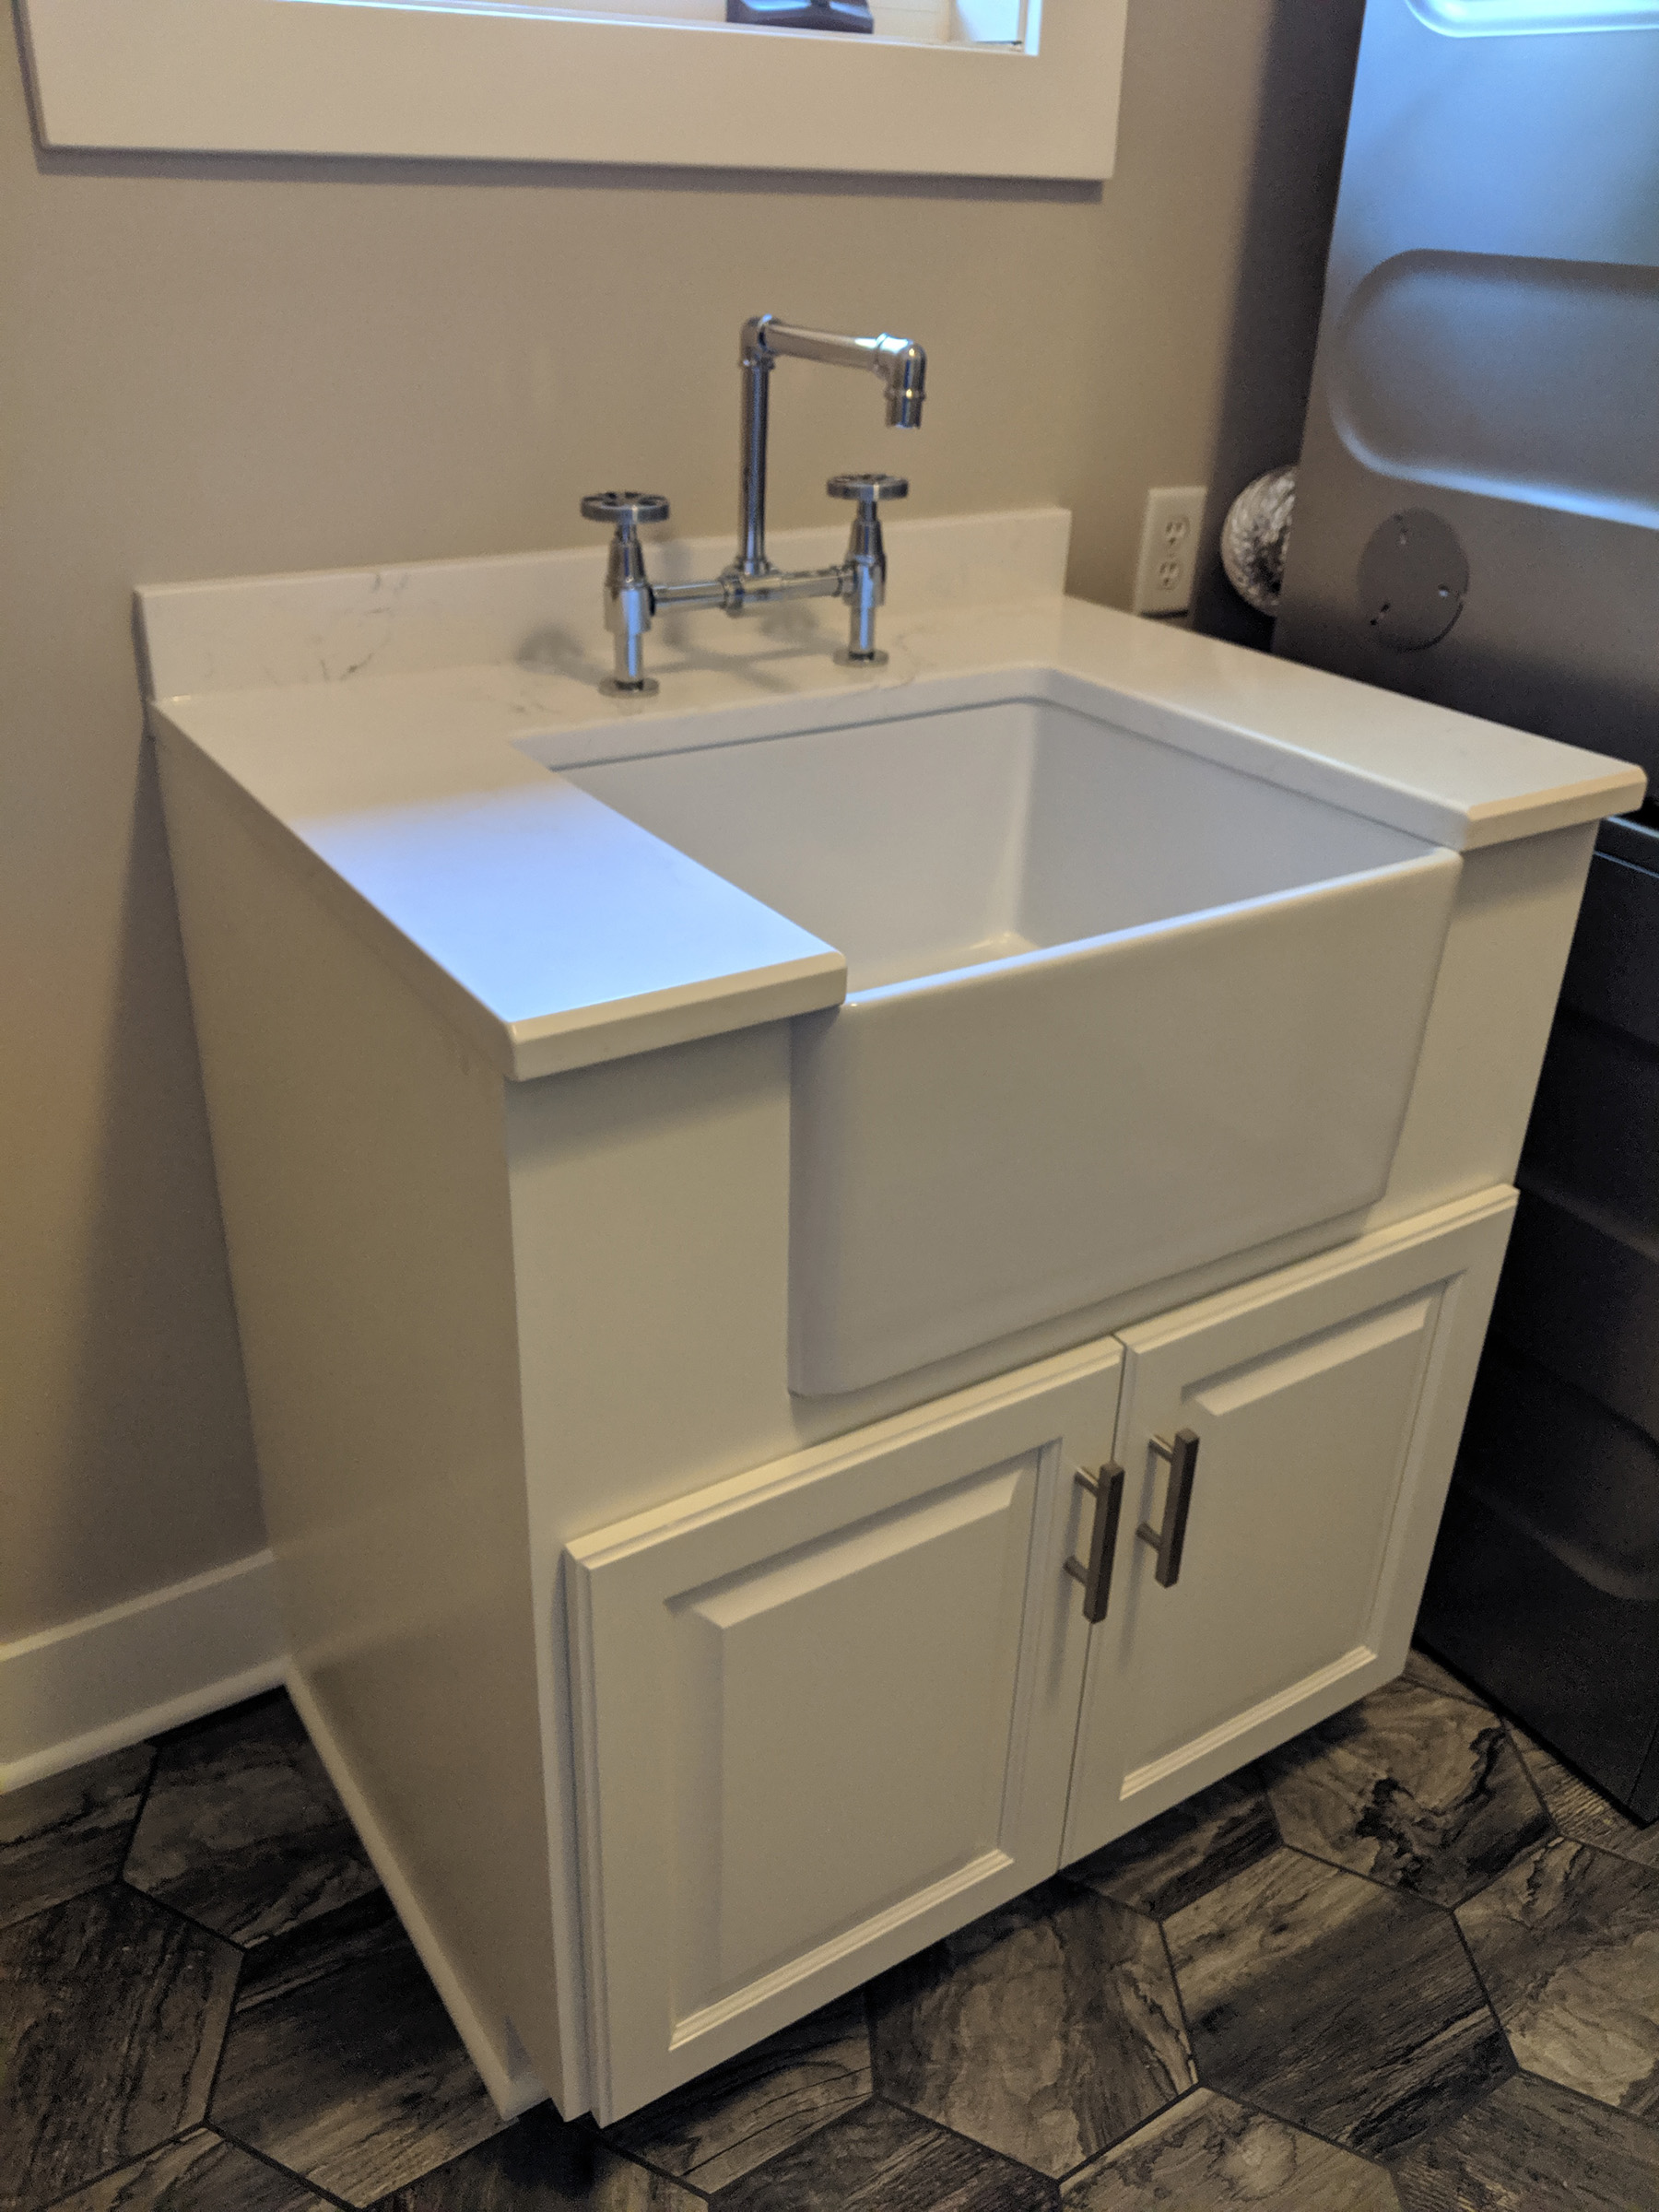 Apron style utility sink